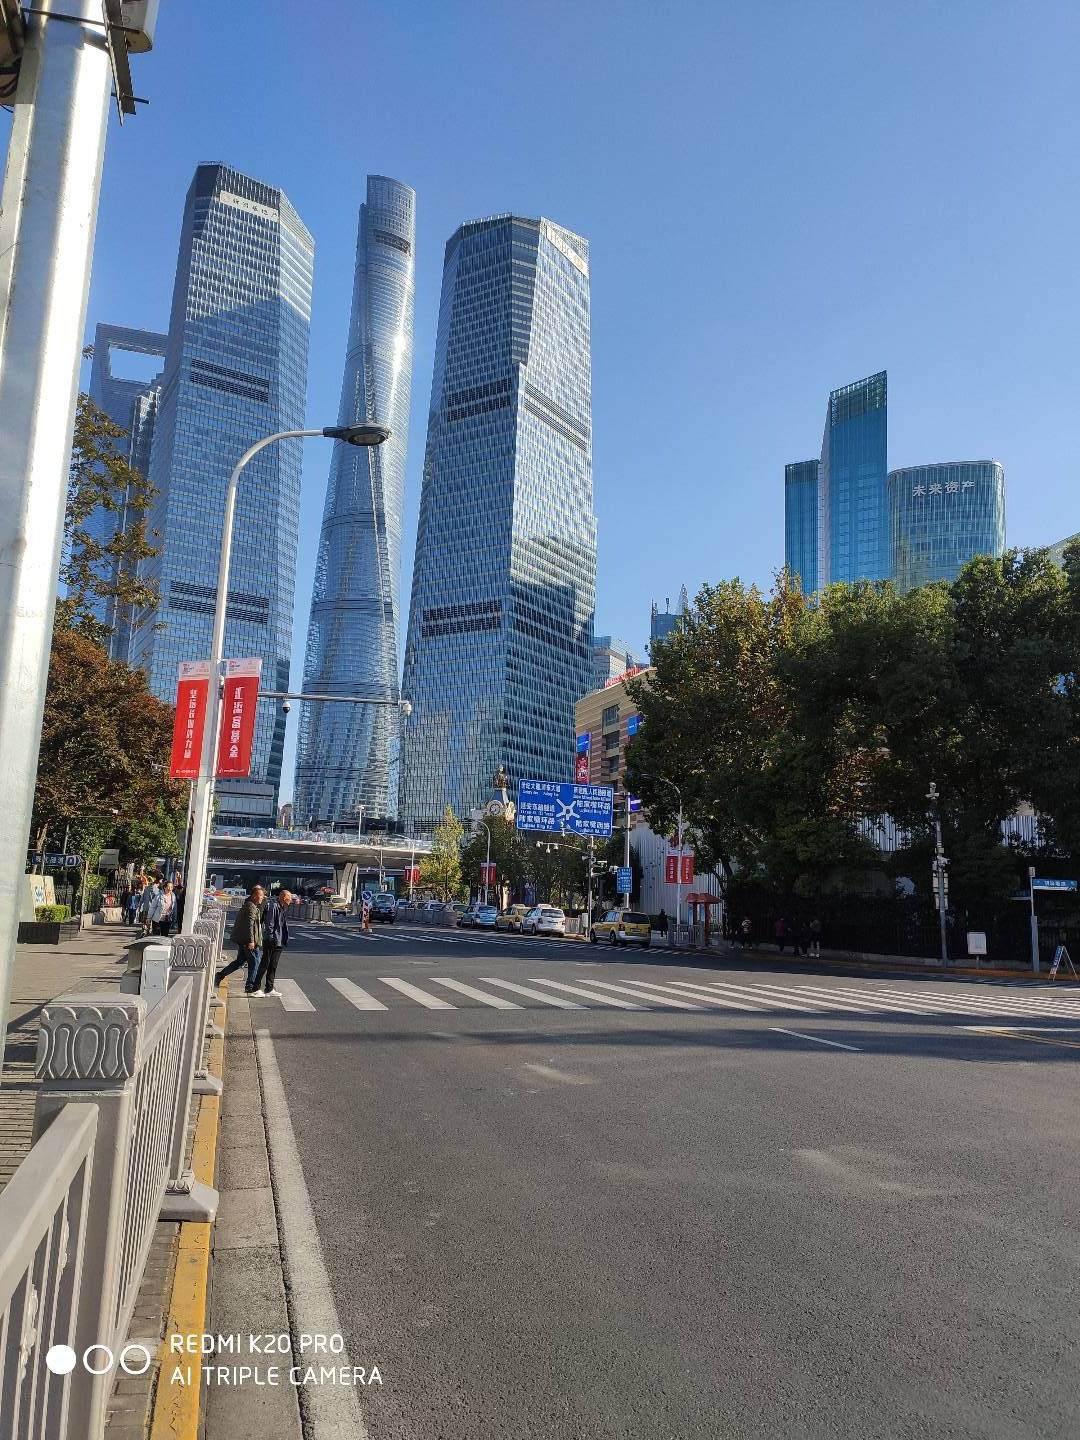 That’s Shanghai’s World Financial Center